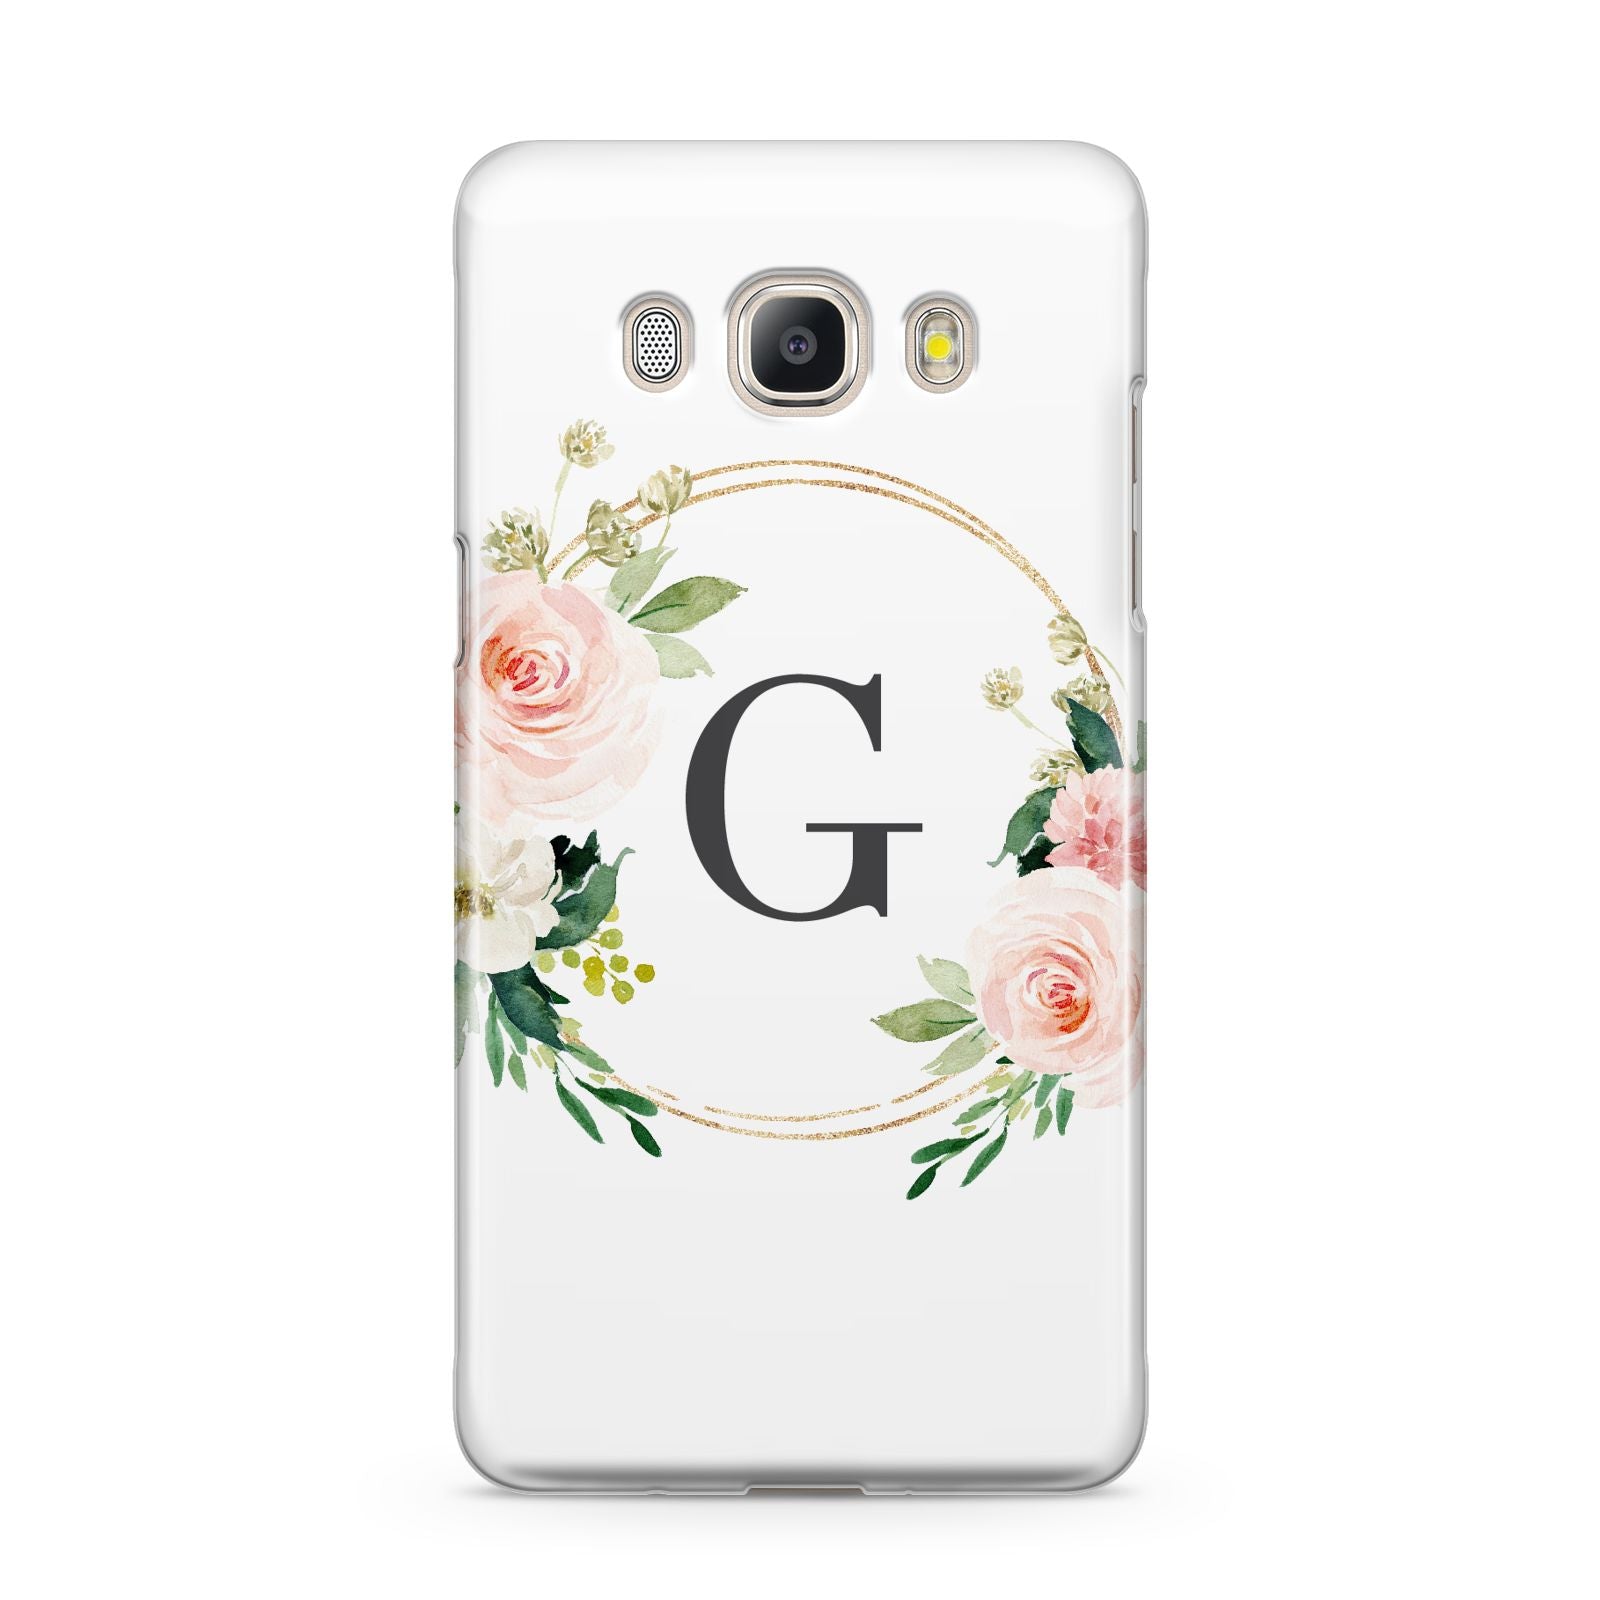 Personalised Blush Floral Wreath Samsung Galaxy J5 2016 Case